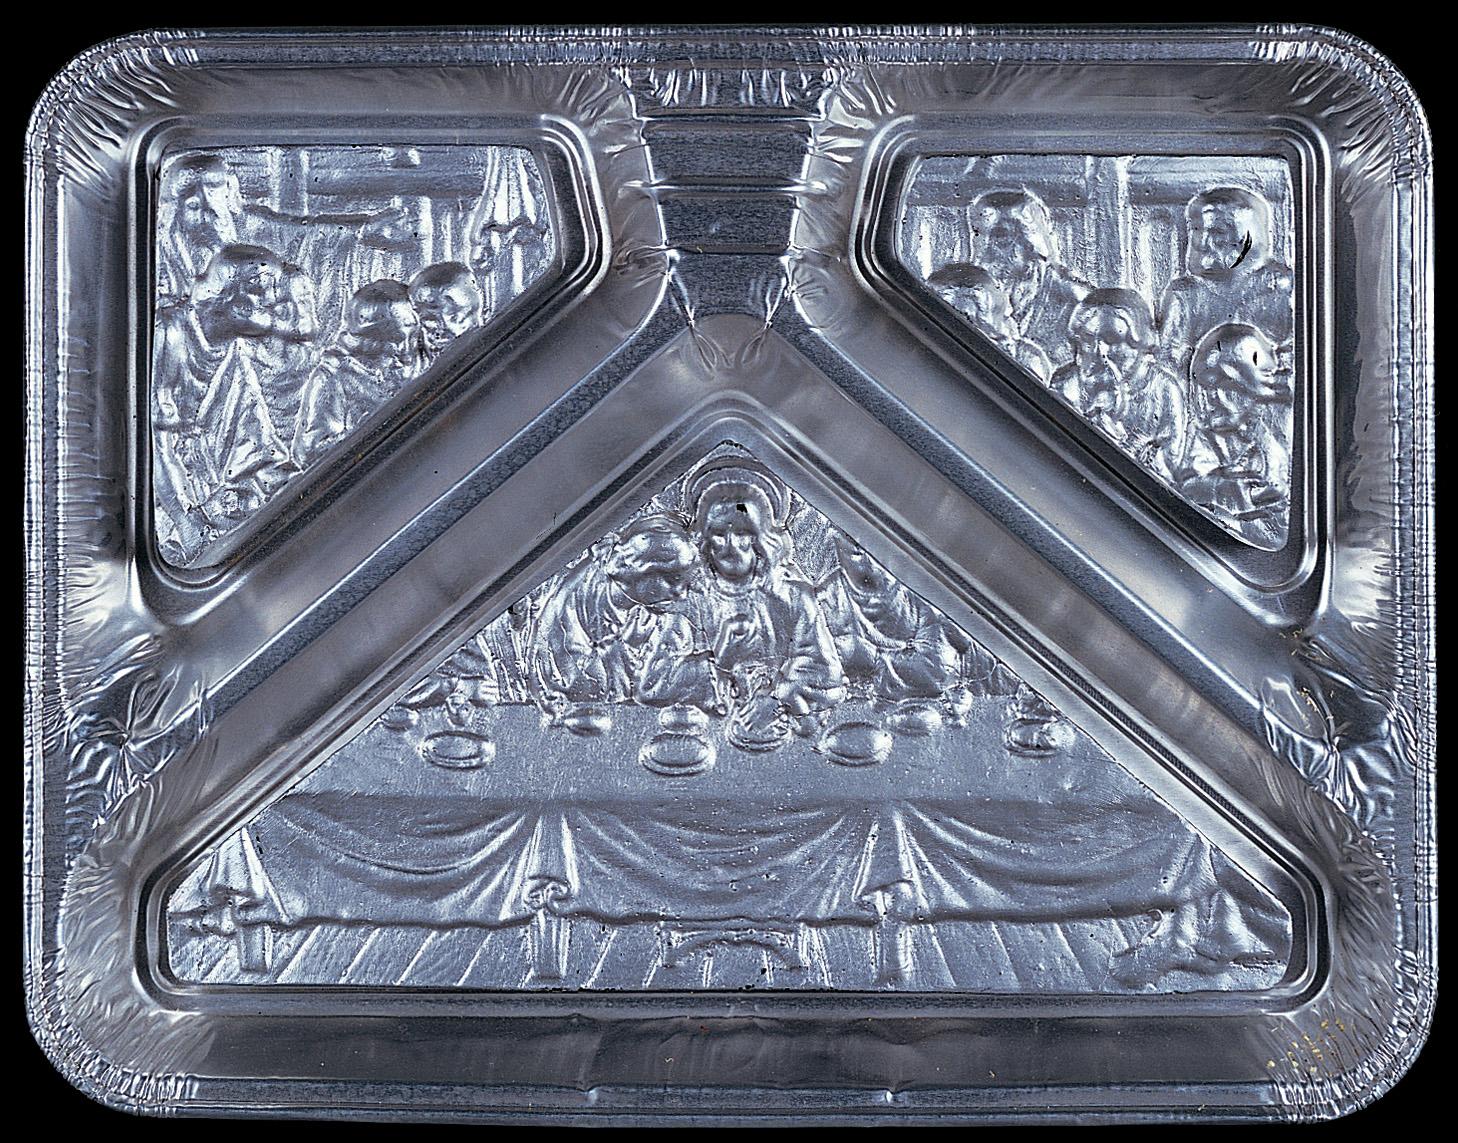 Burt Payne 3 Abstract Sculpture - The Last Supper